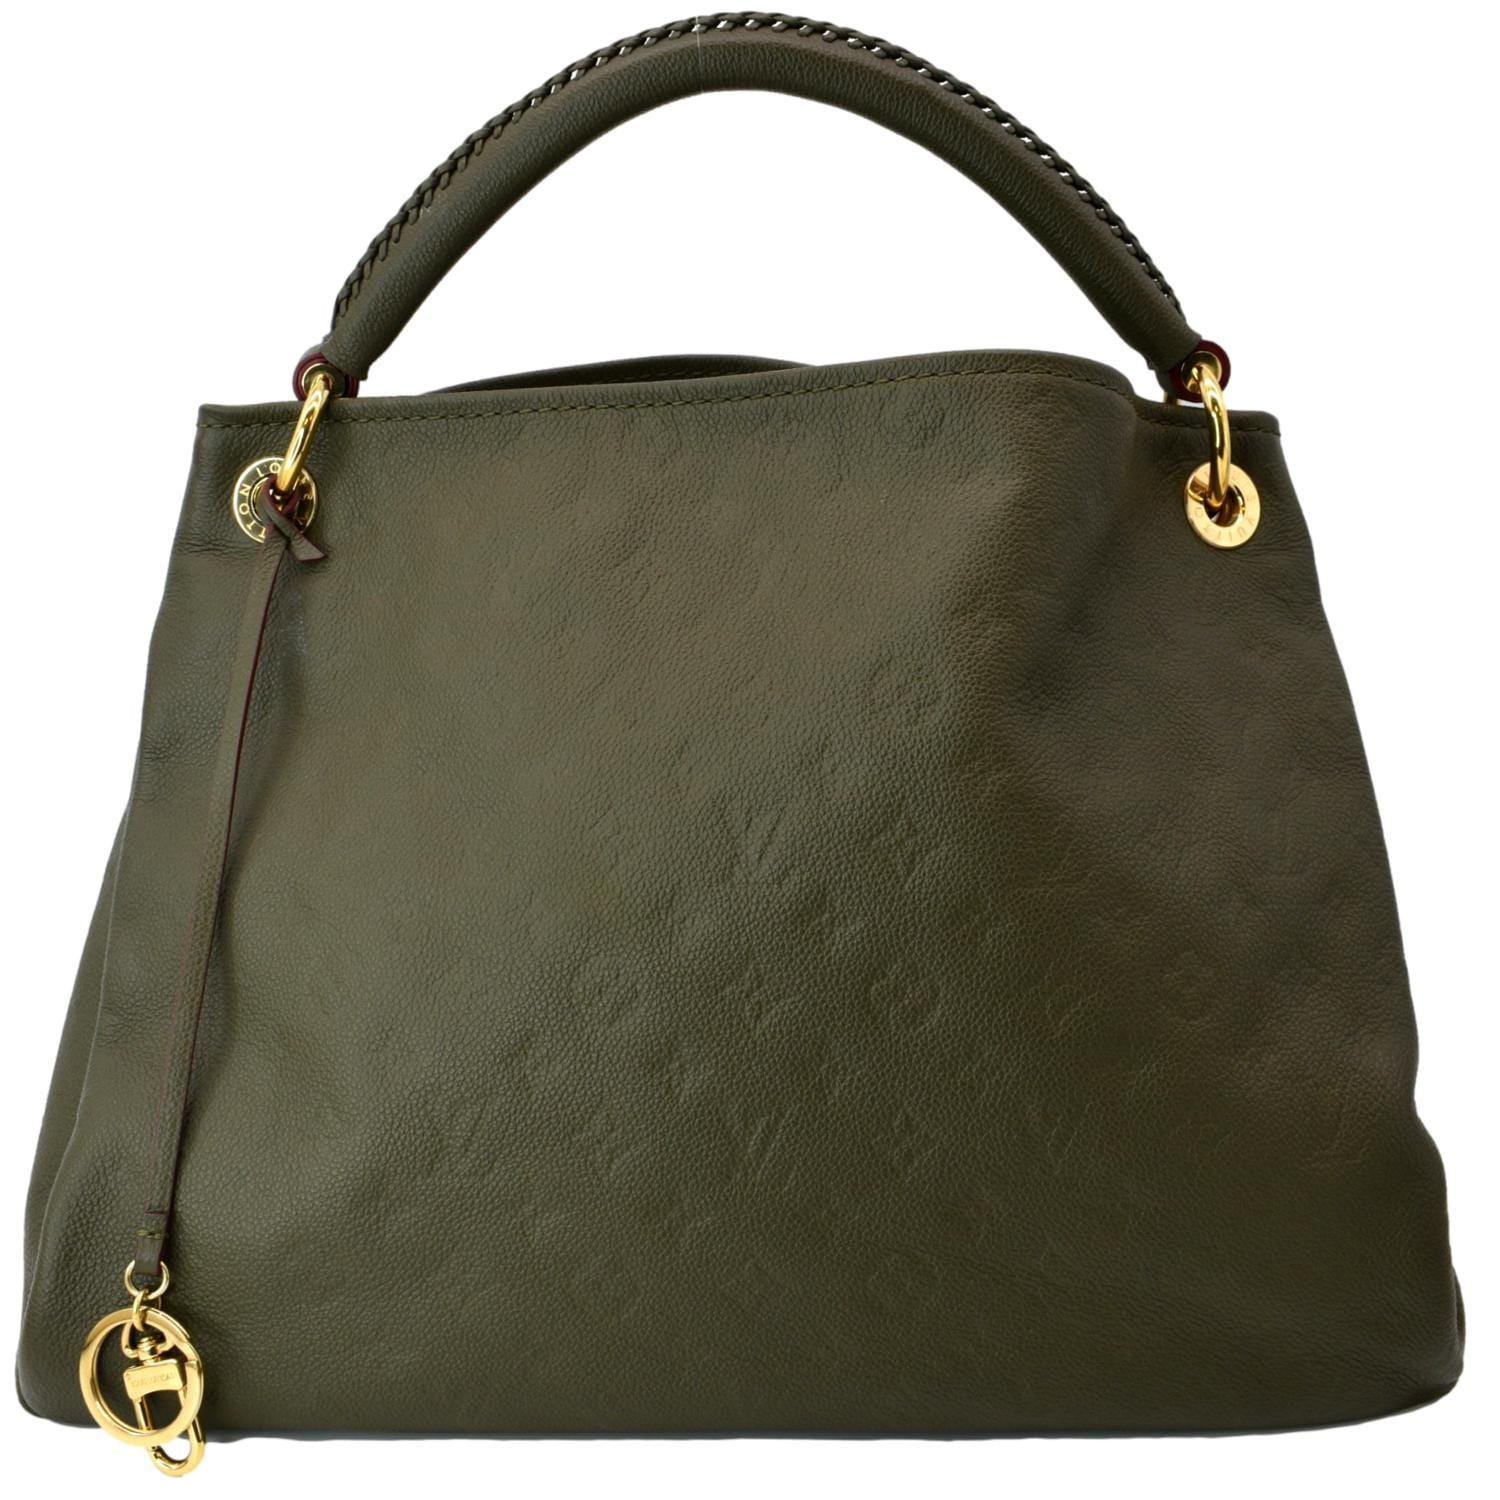 New LV release!! Mini moon shoulder bag in vert green empriente leathe